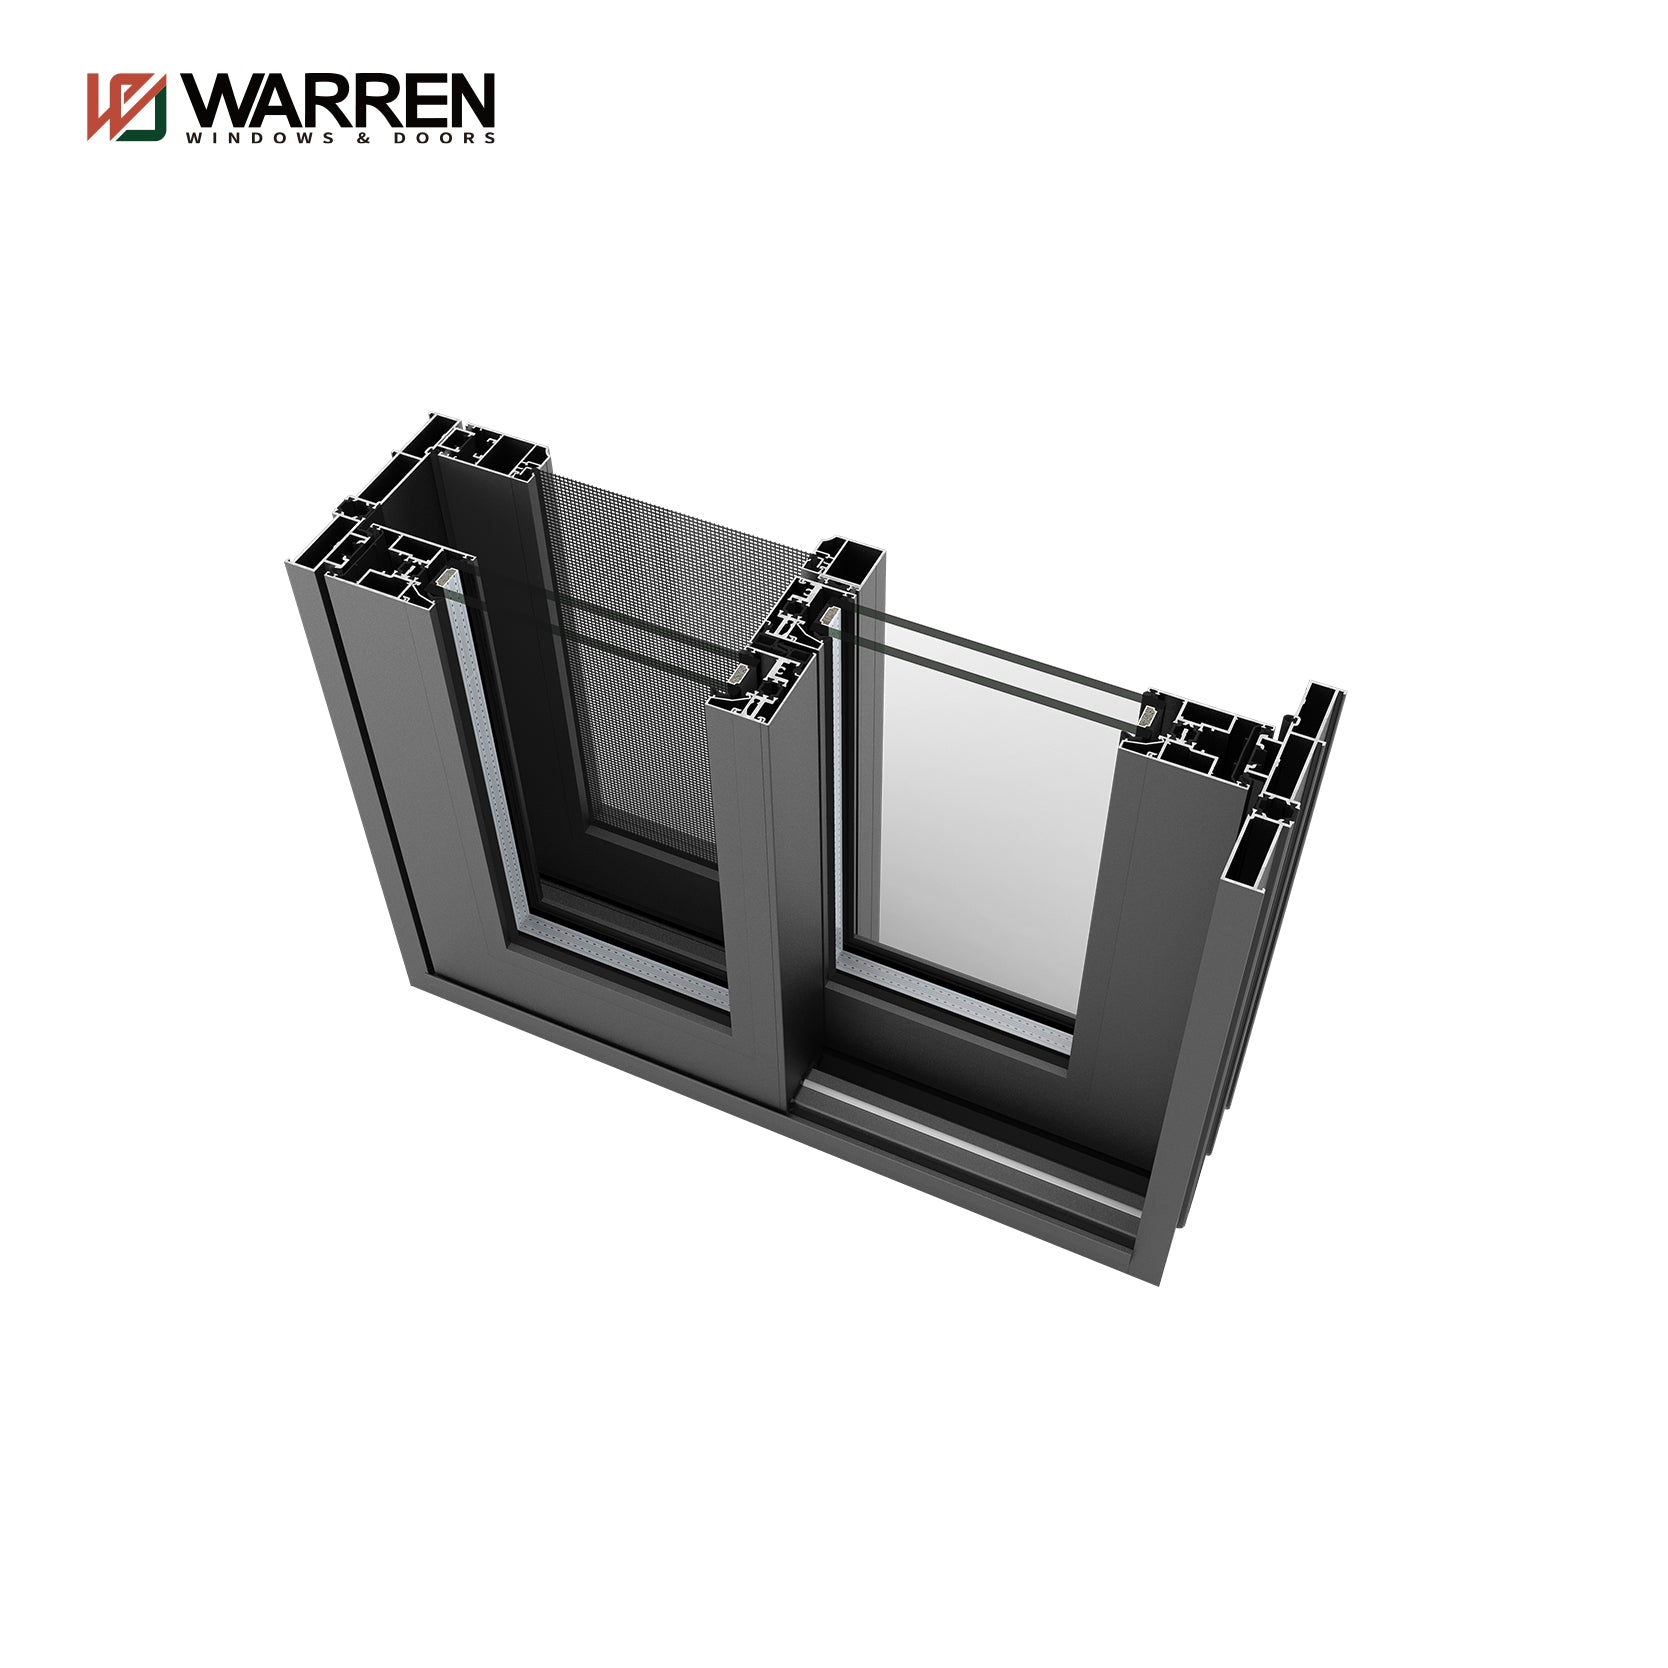 Warren Perfect Quality Colorful Commercial System Aluminum Sliding Door  Sliding Door With Screen